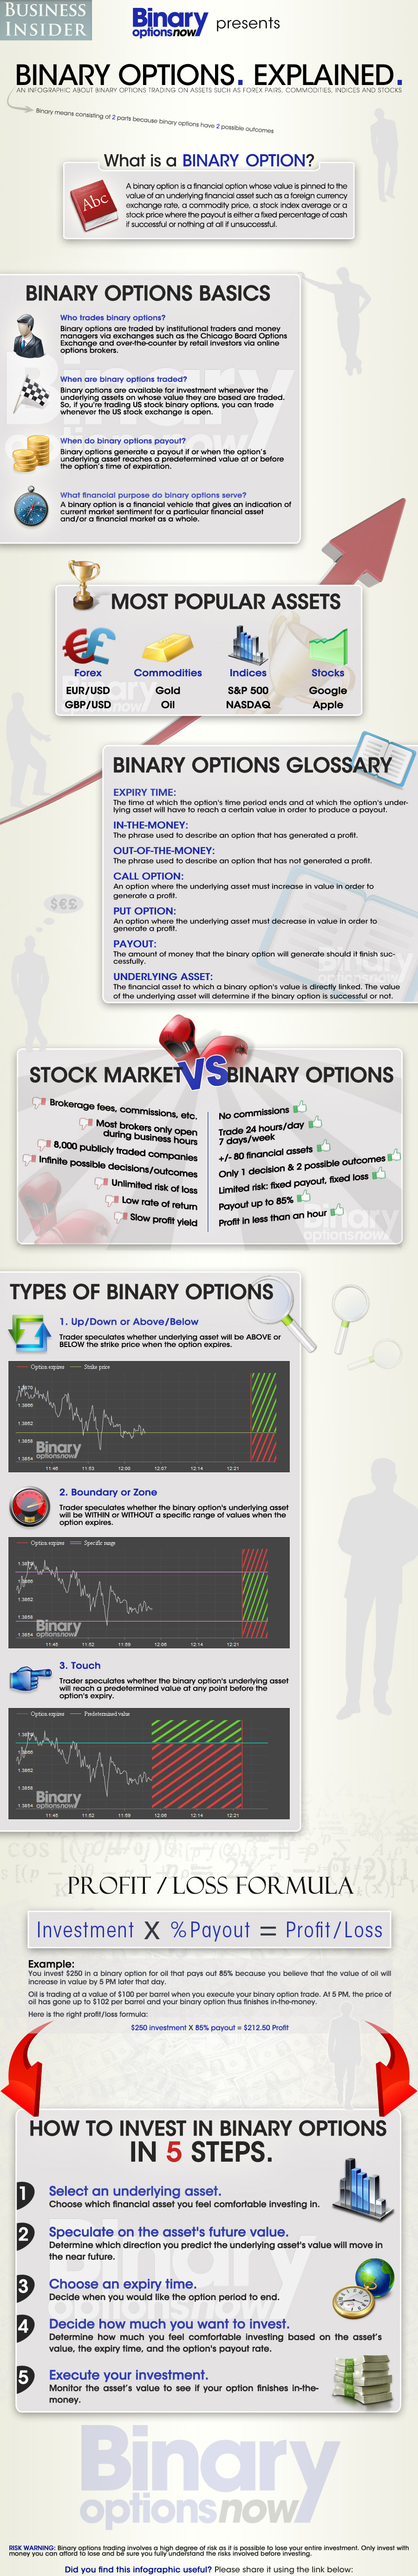 Binary options company